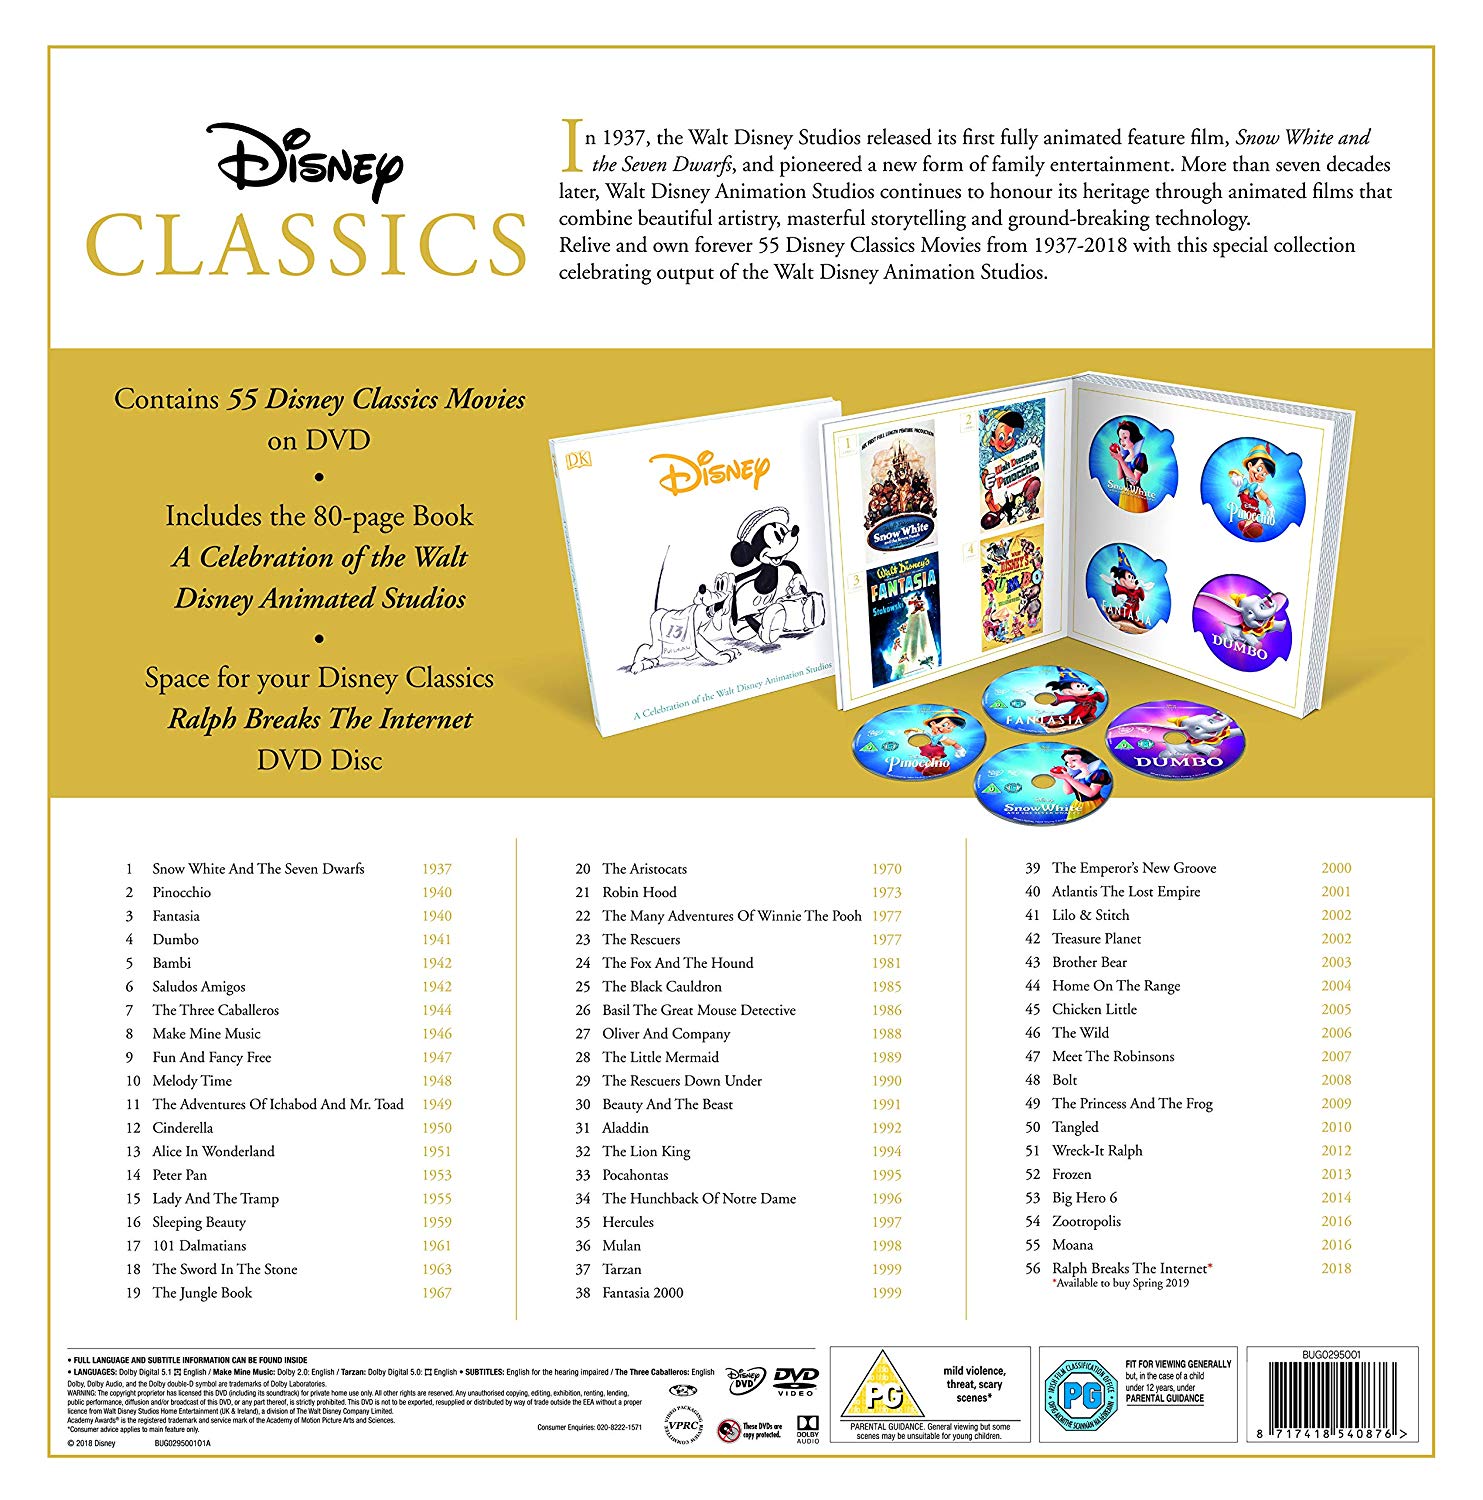 Disney Classics 1937 2018 Complete Movie Box Set Coming Soon To The Uk Diskingdom Com Disney Marvel Star Wars Merchandise News